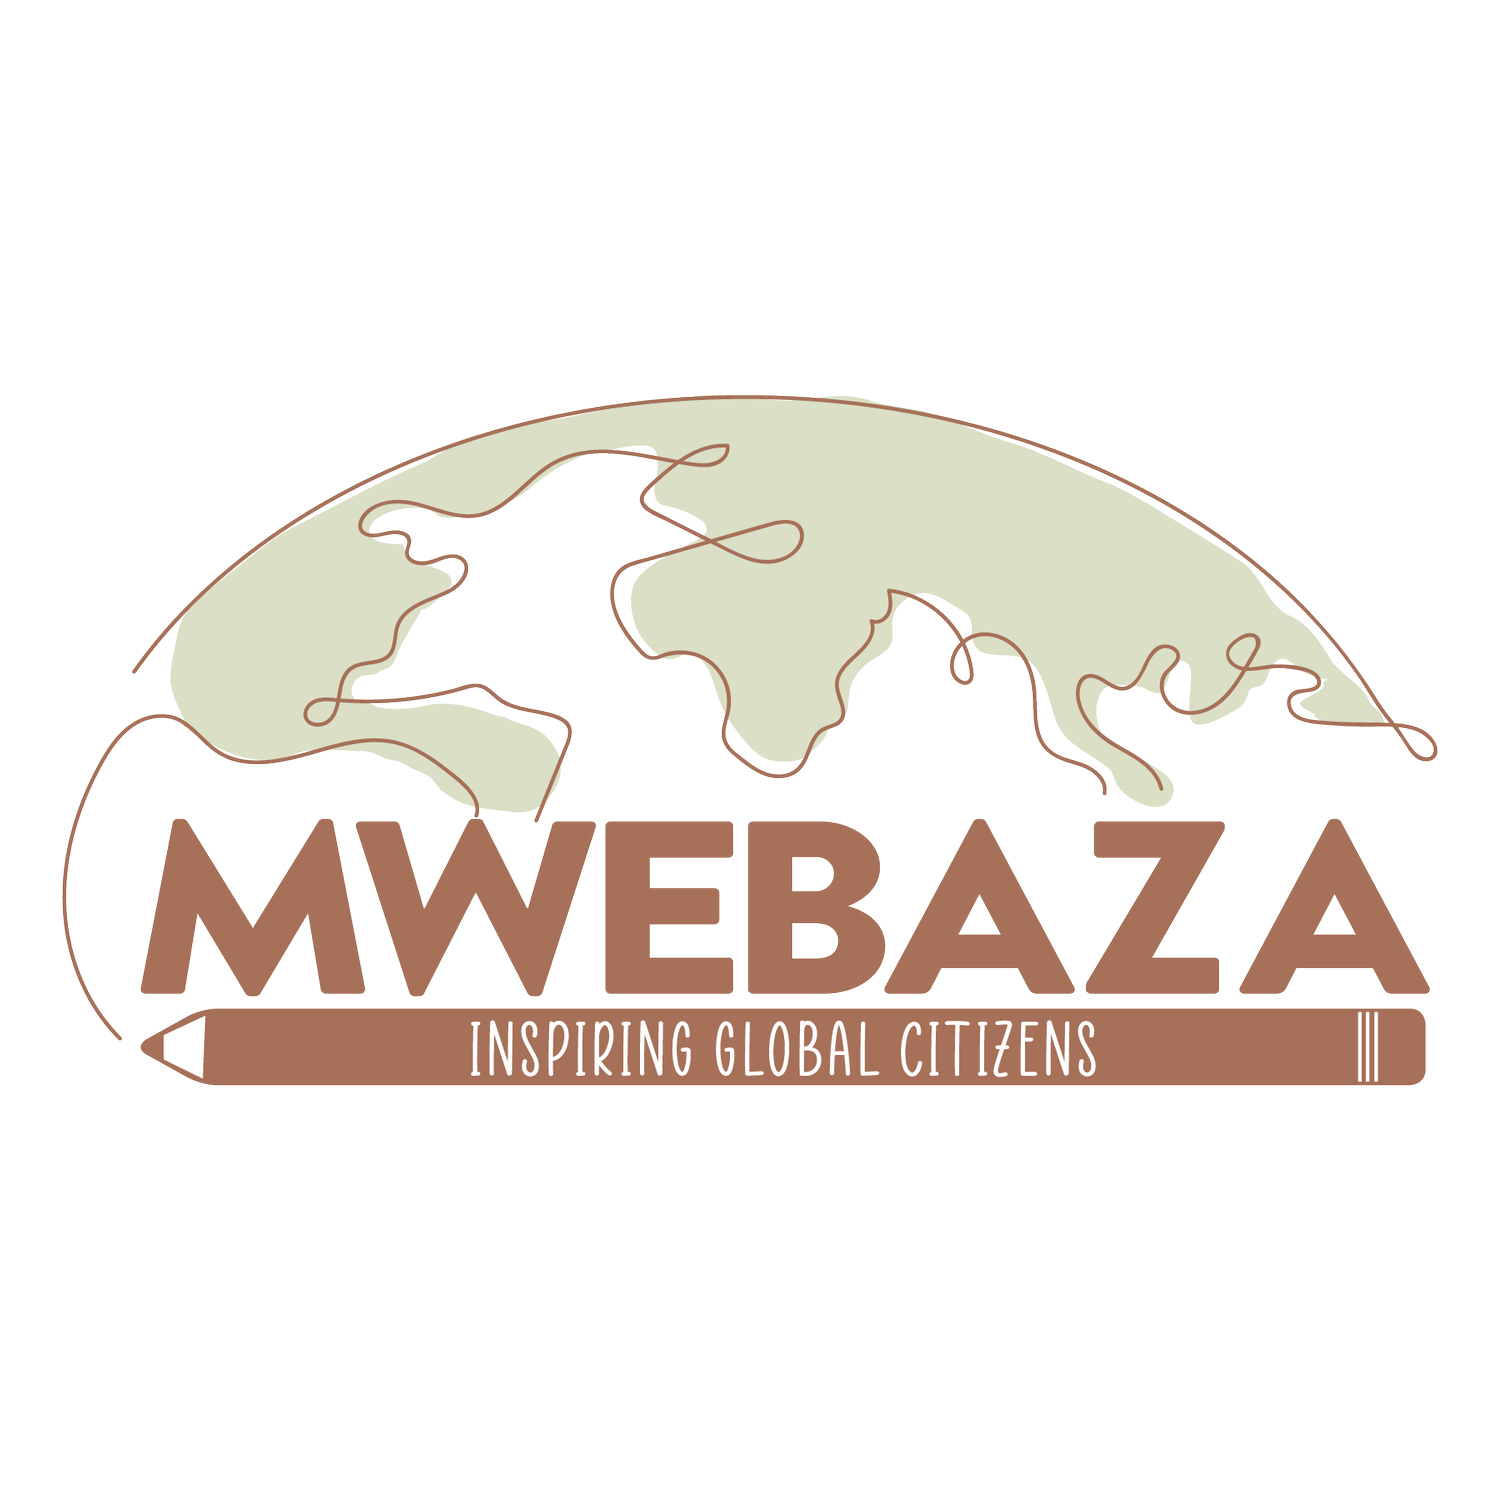 The Mwebaza Foundation